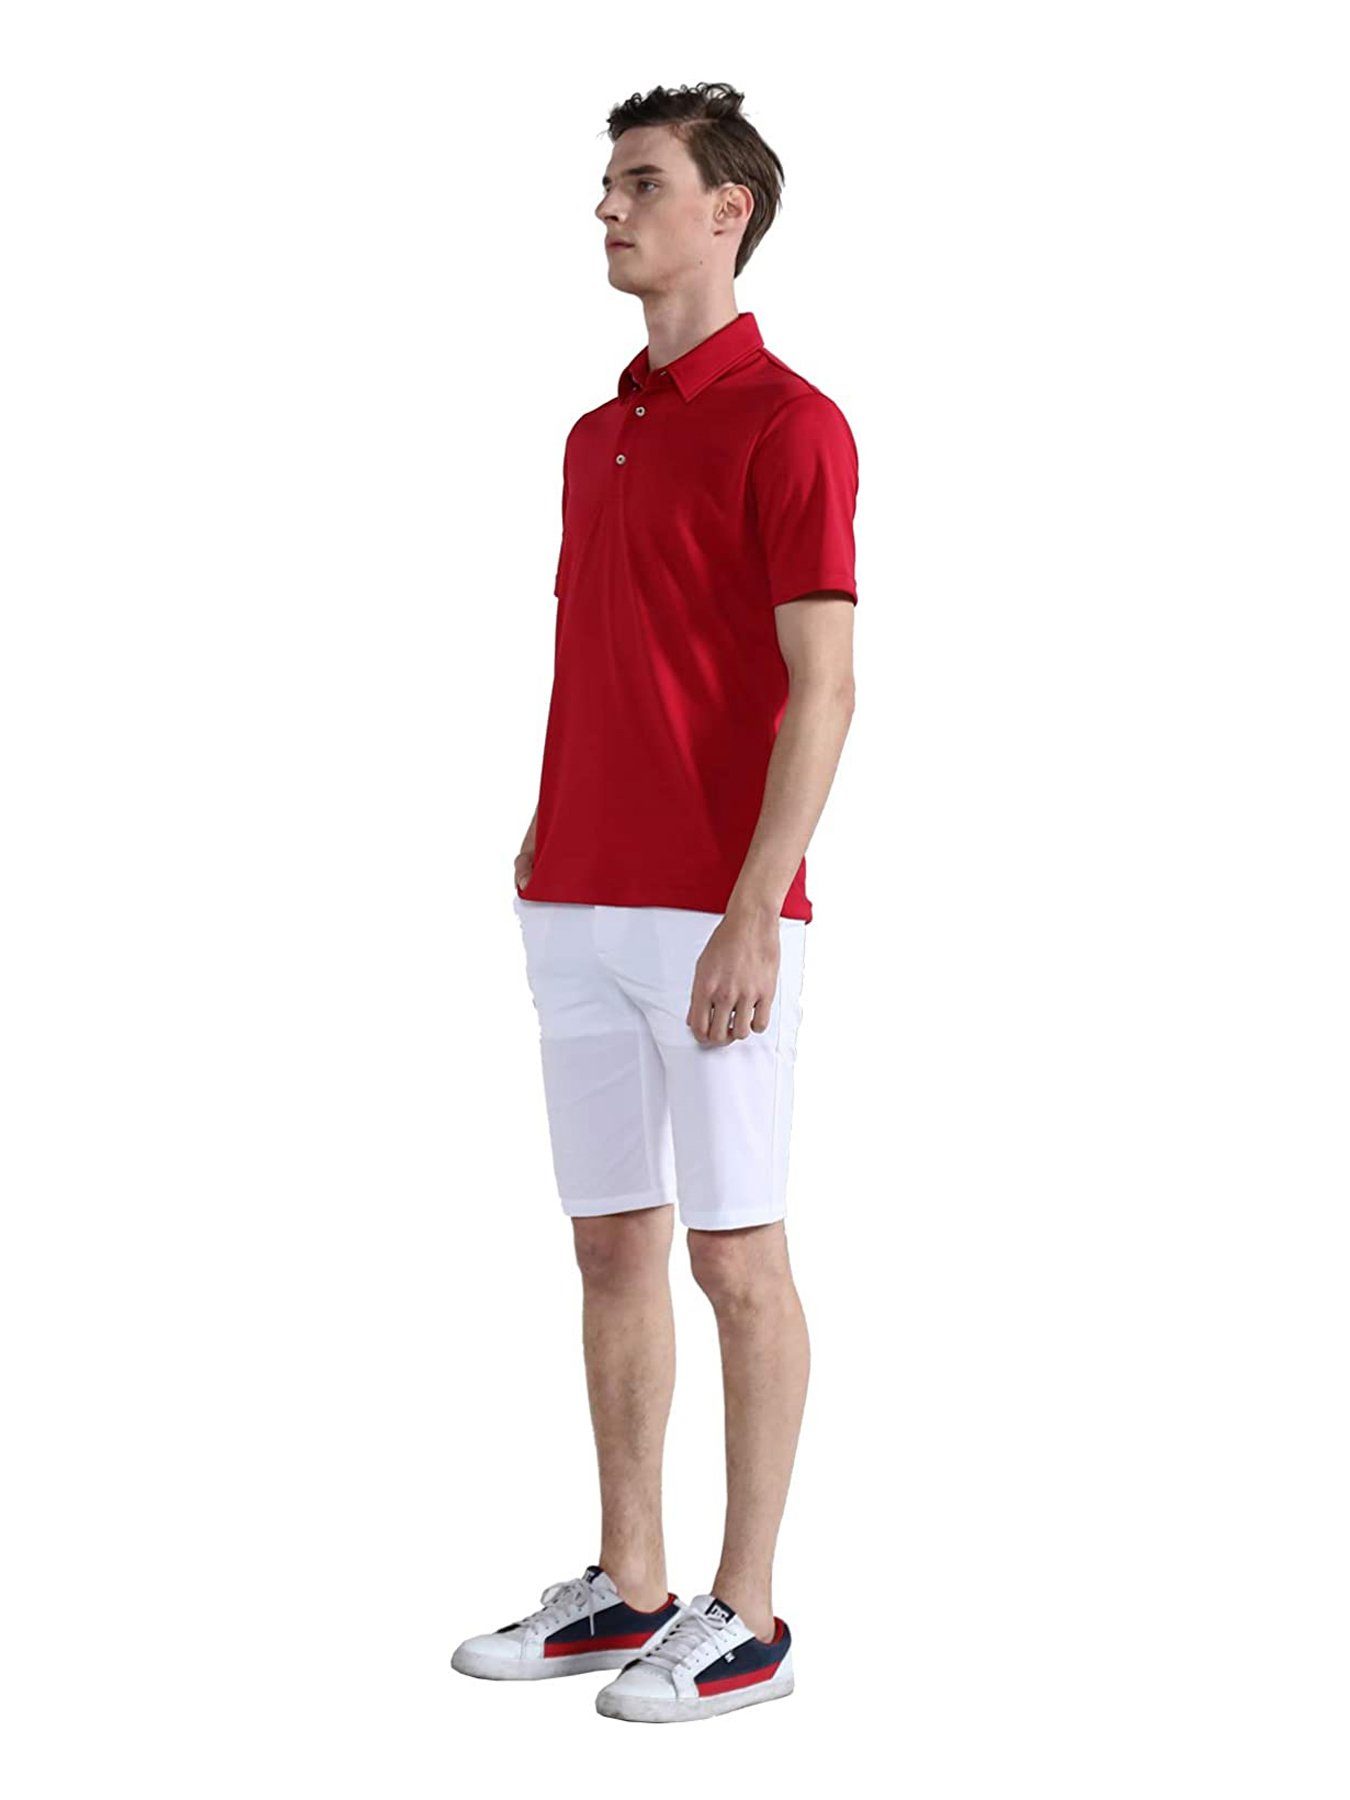 Standard Kurzarm DEBAIJIA Leicht Gemütlich Poloshirt DEBAIJIA Poloshirt Herren Rot Golf Fit